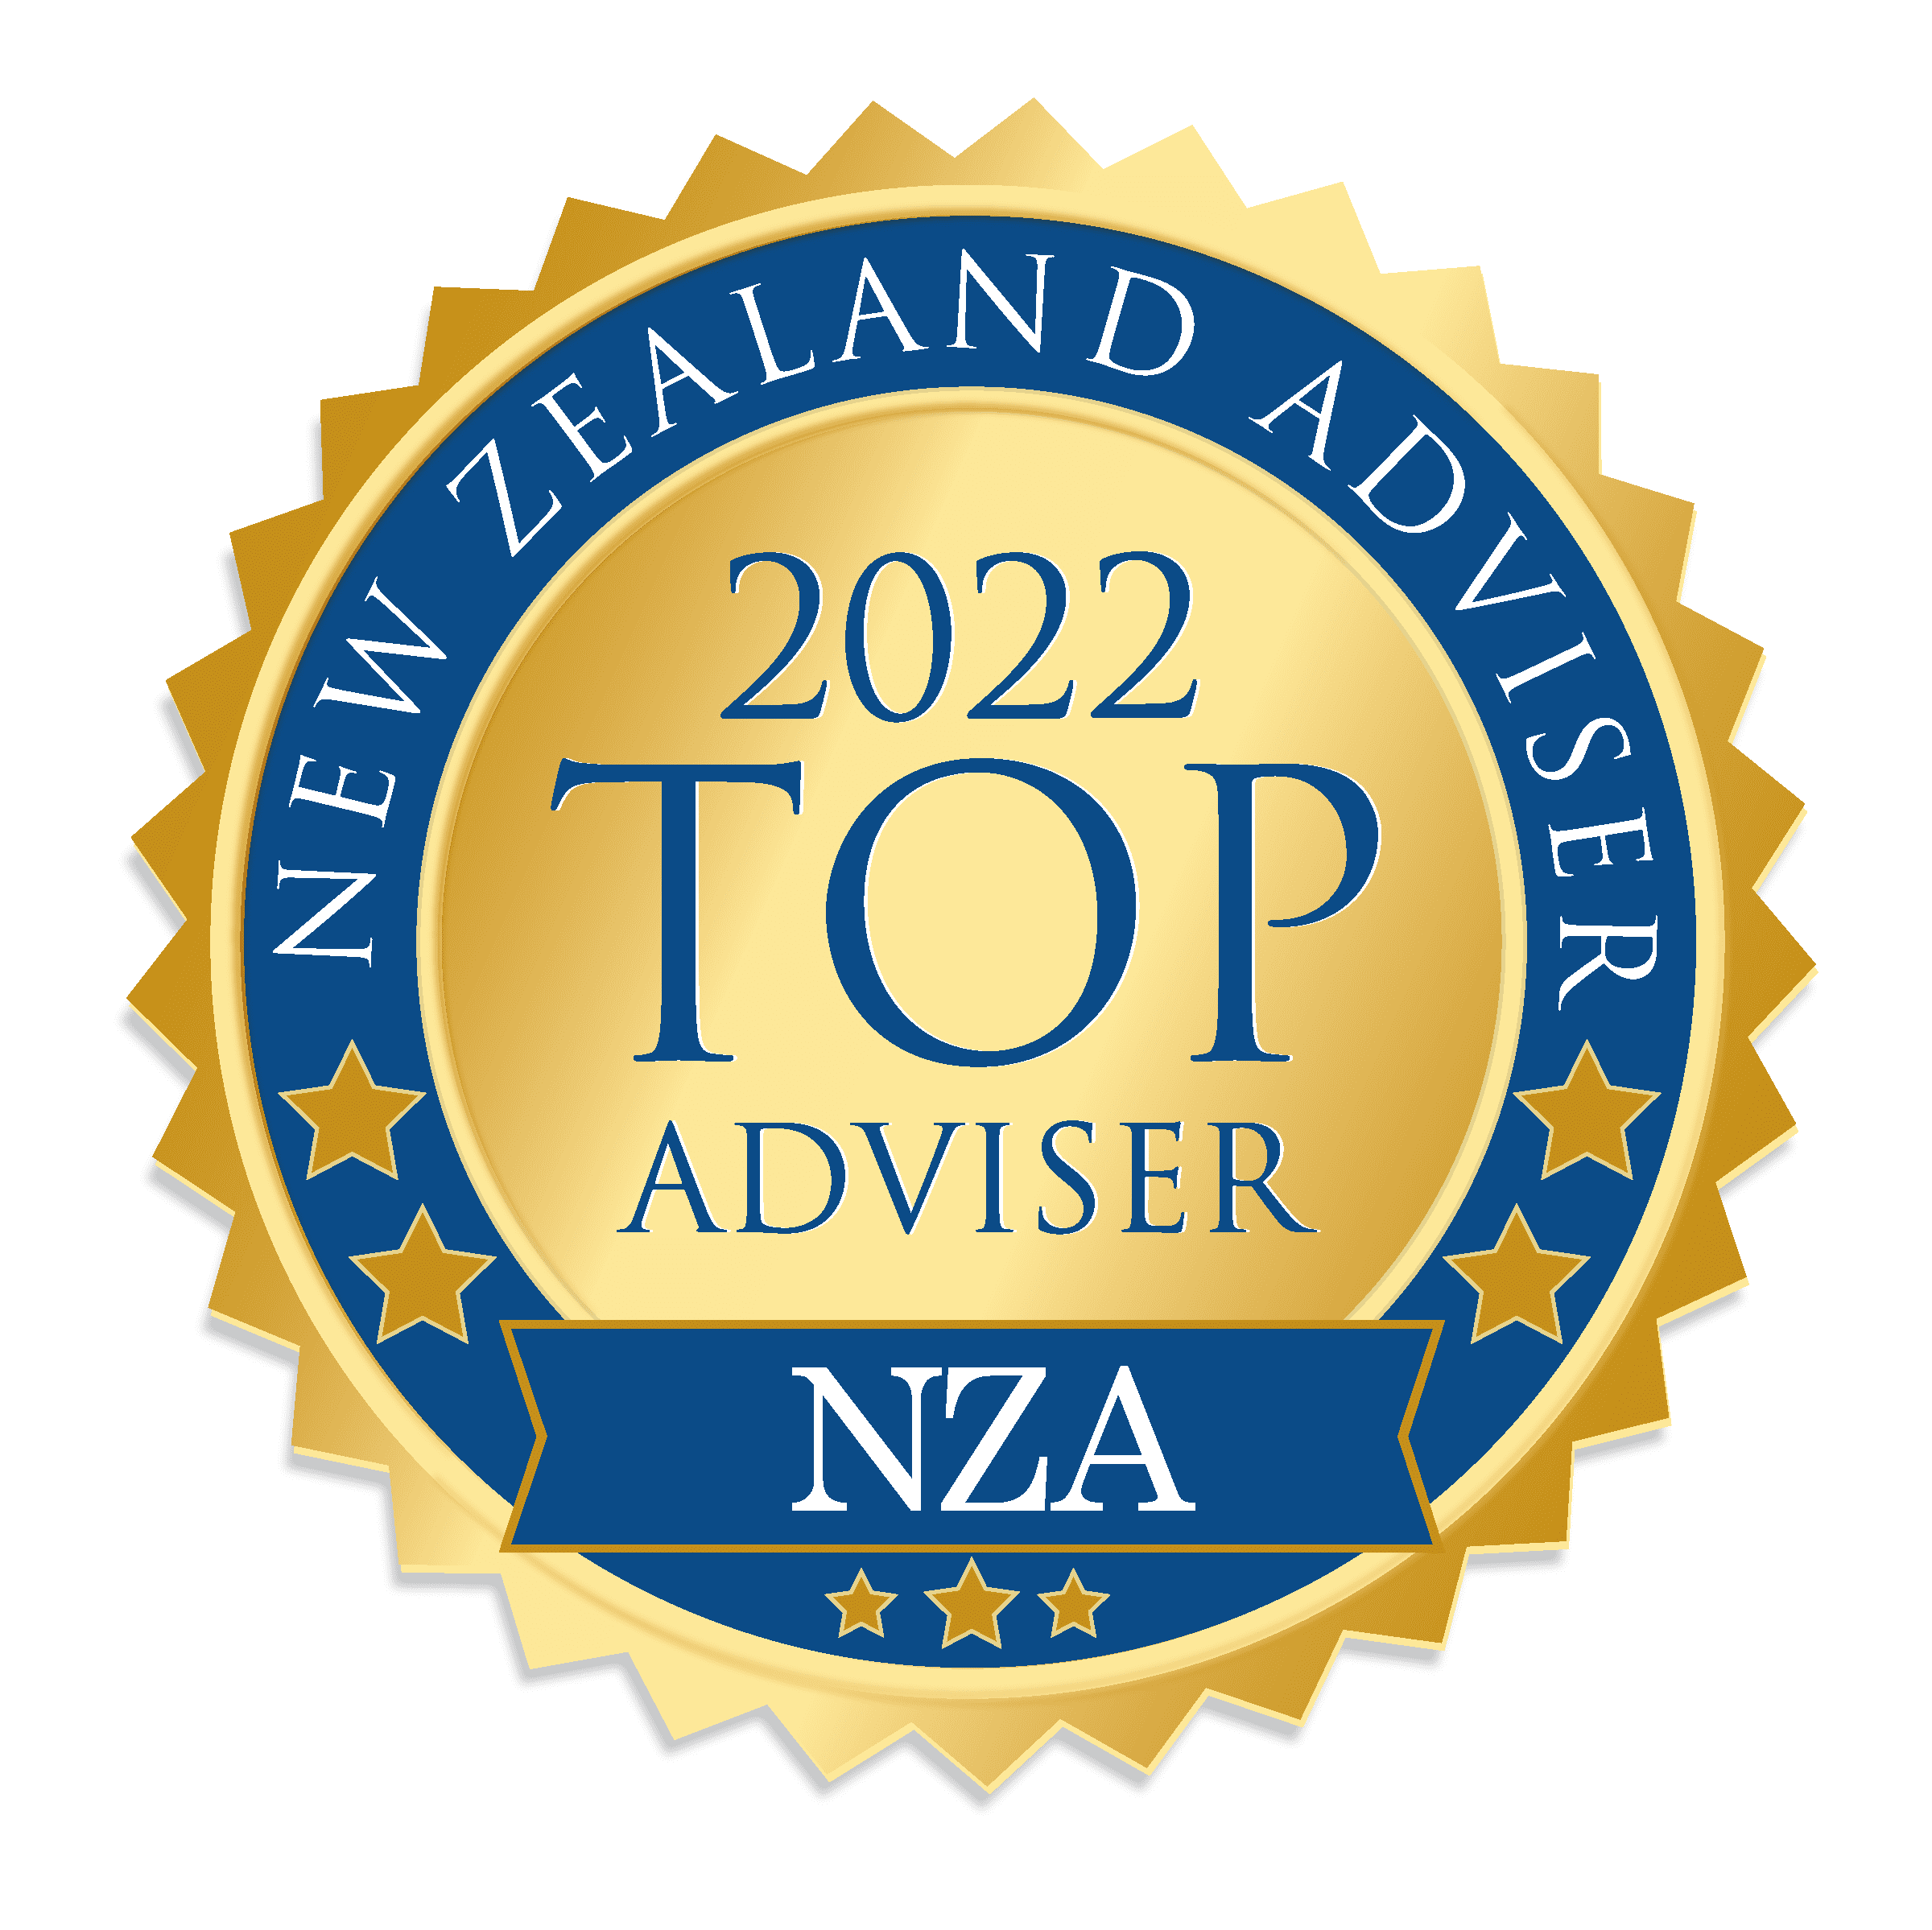 NZ Adviser Top Adviser 2022 Medal